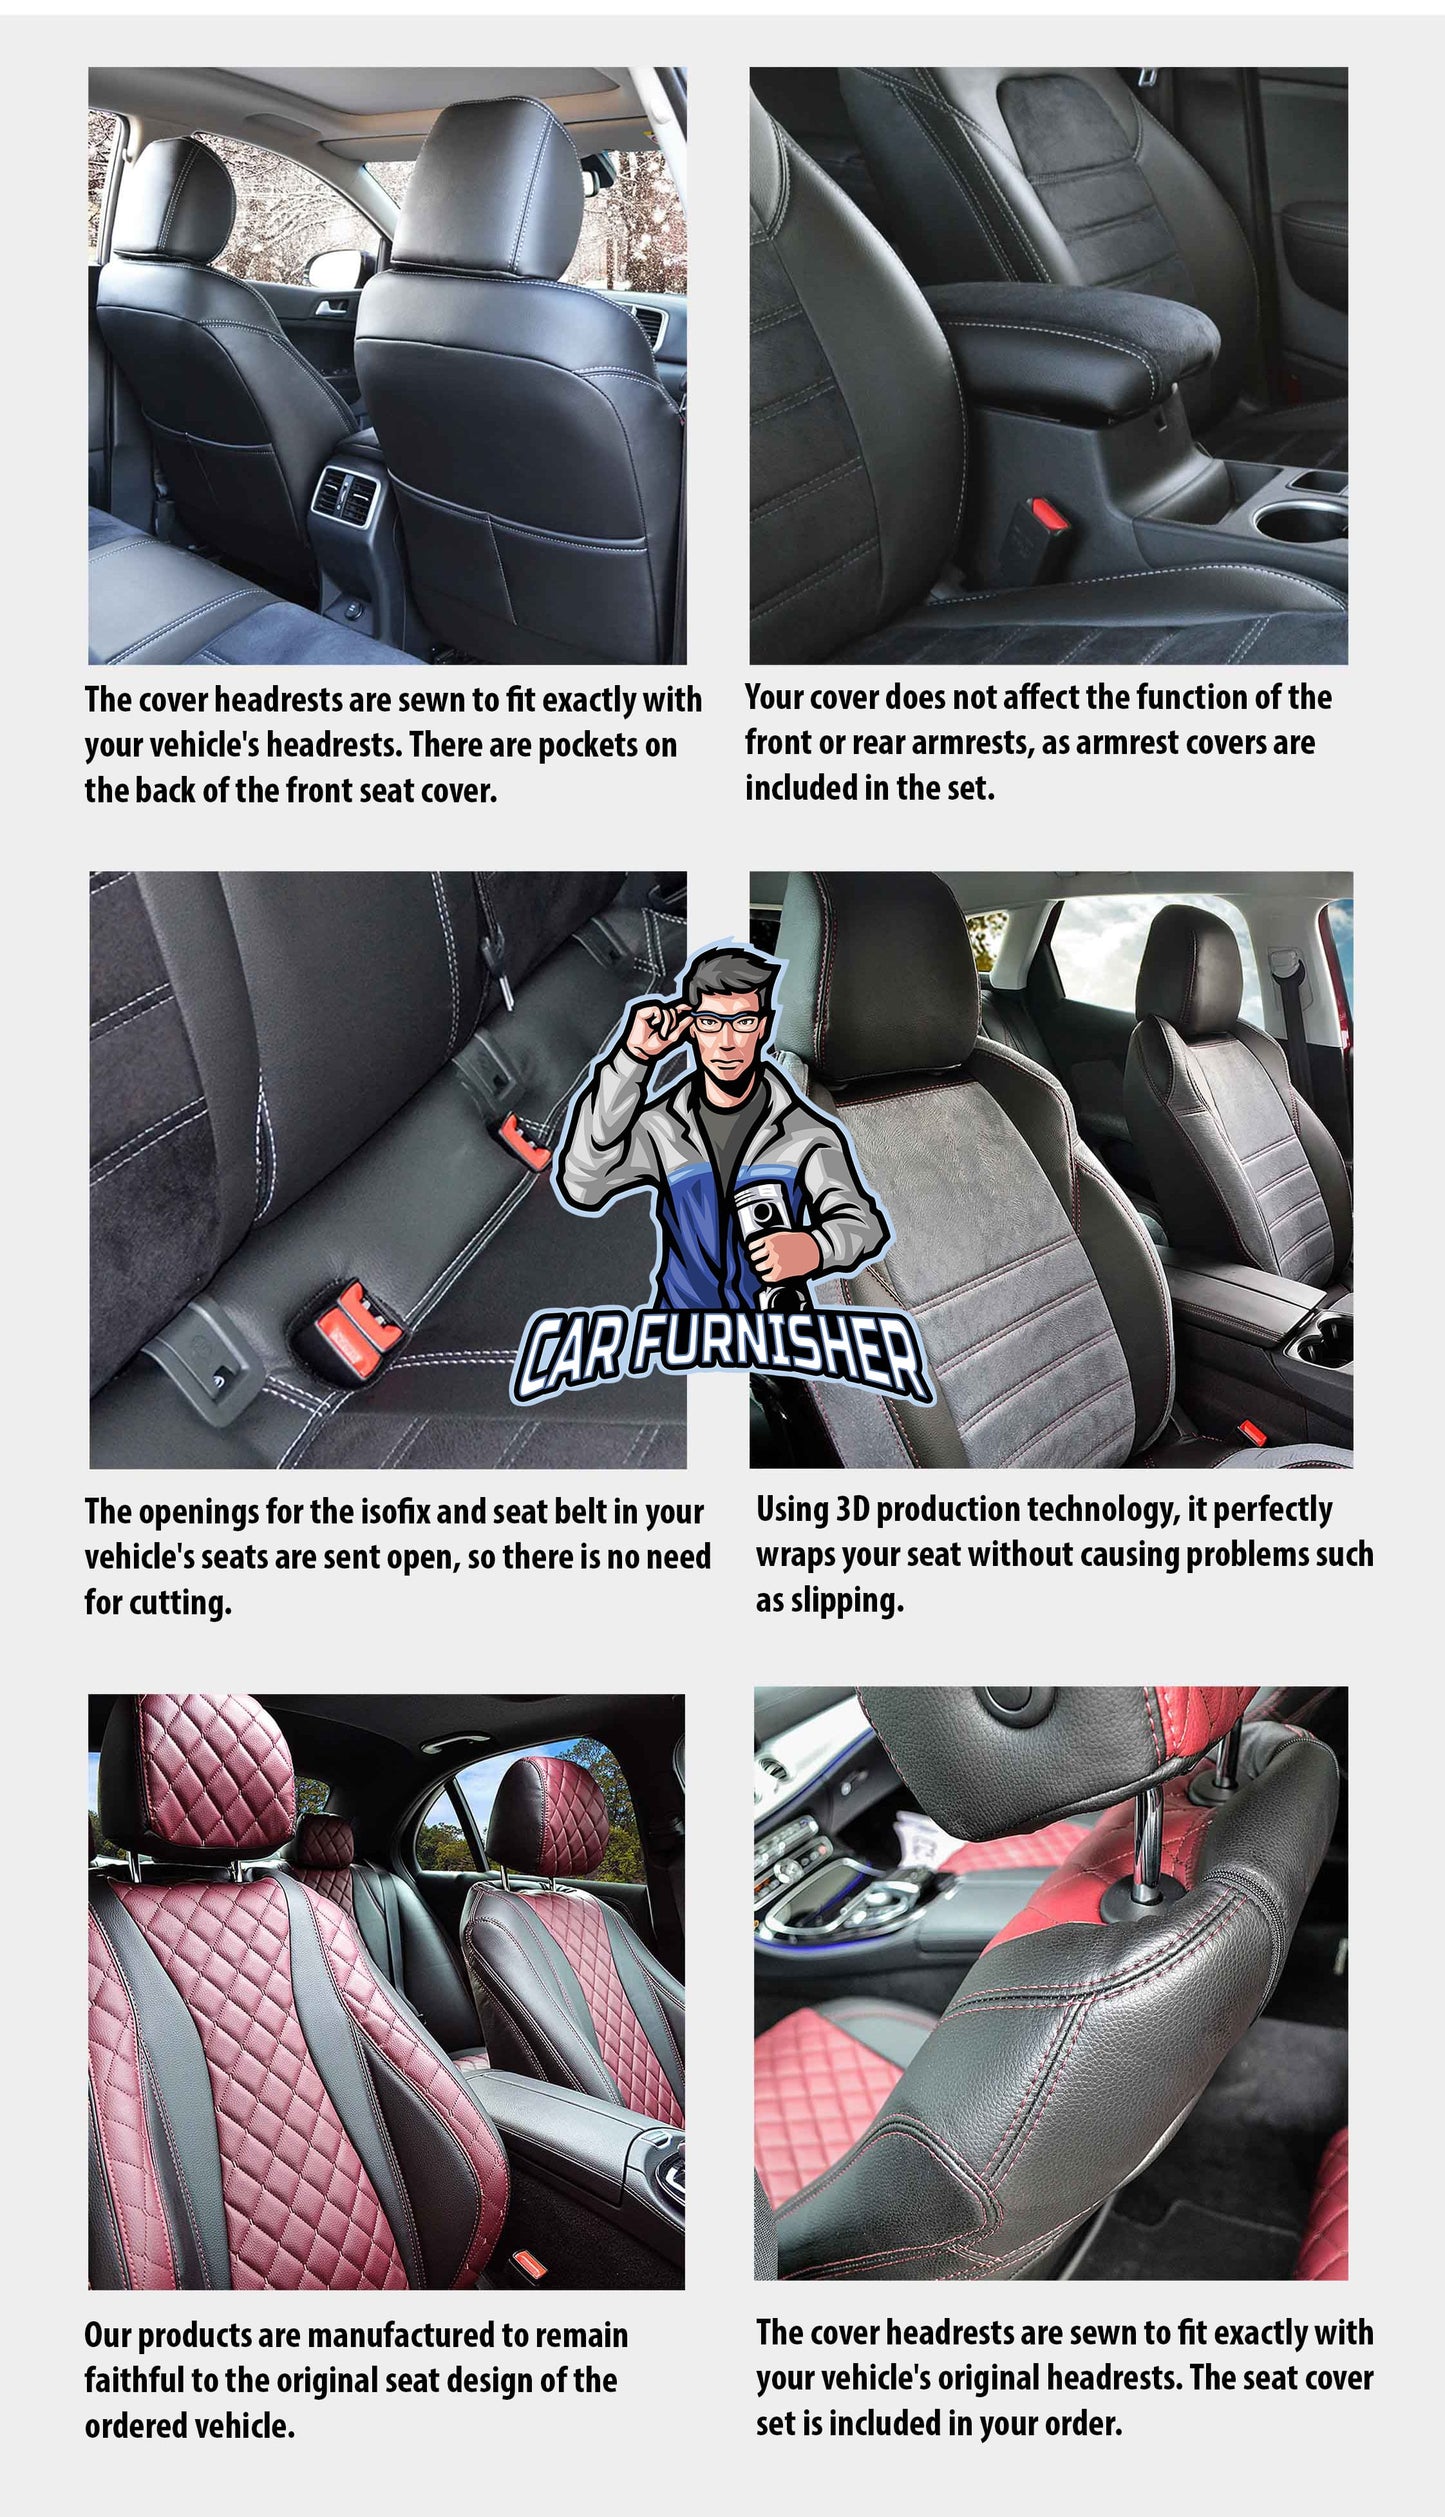 Suzuki Swift Seat Covers Milano Suede Design Burgundy Leather & Suede Fabric